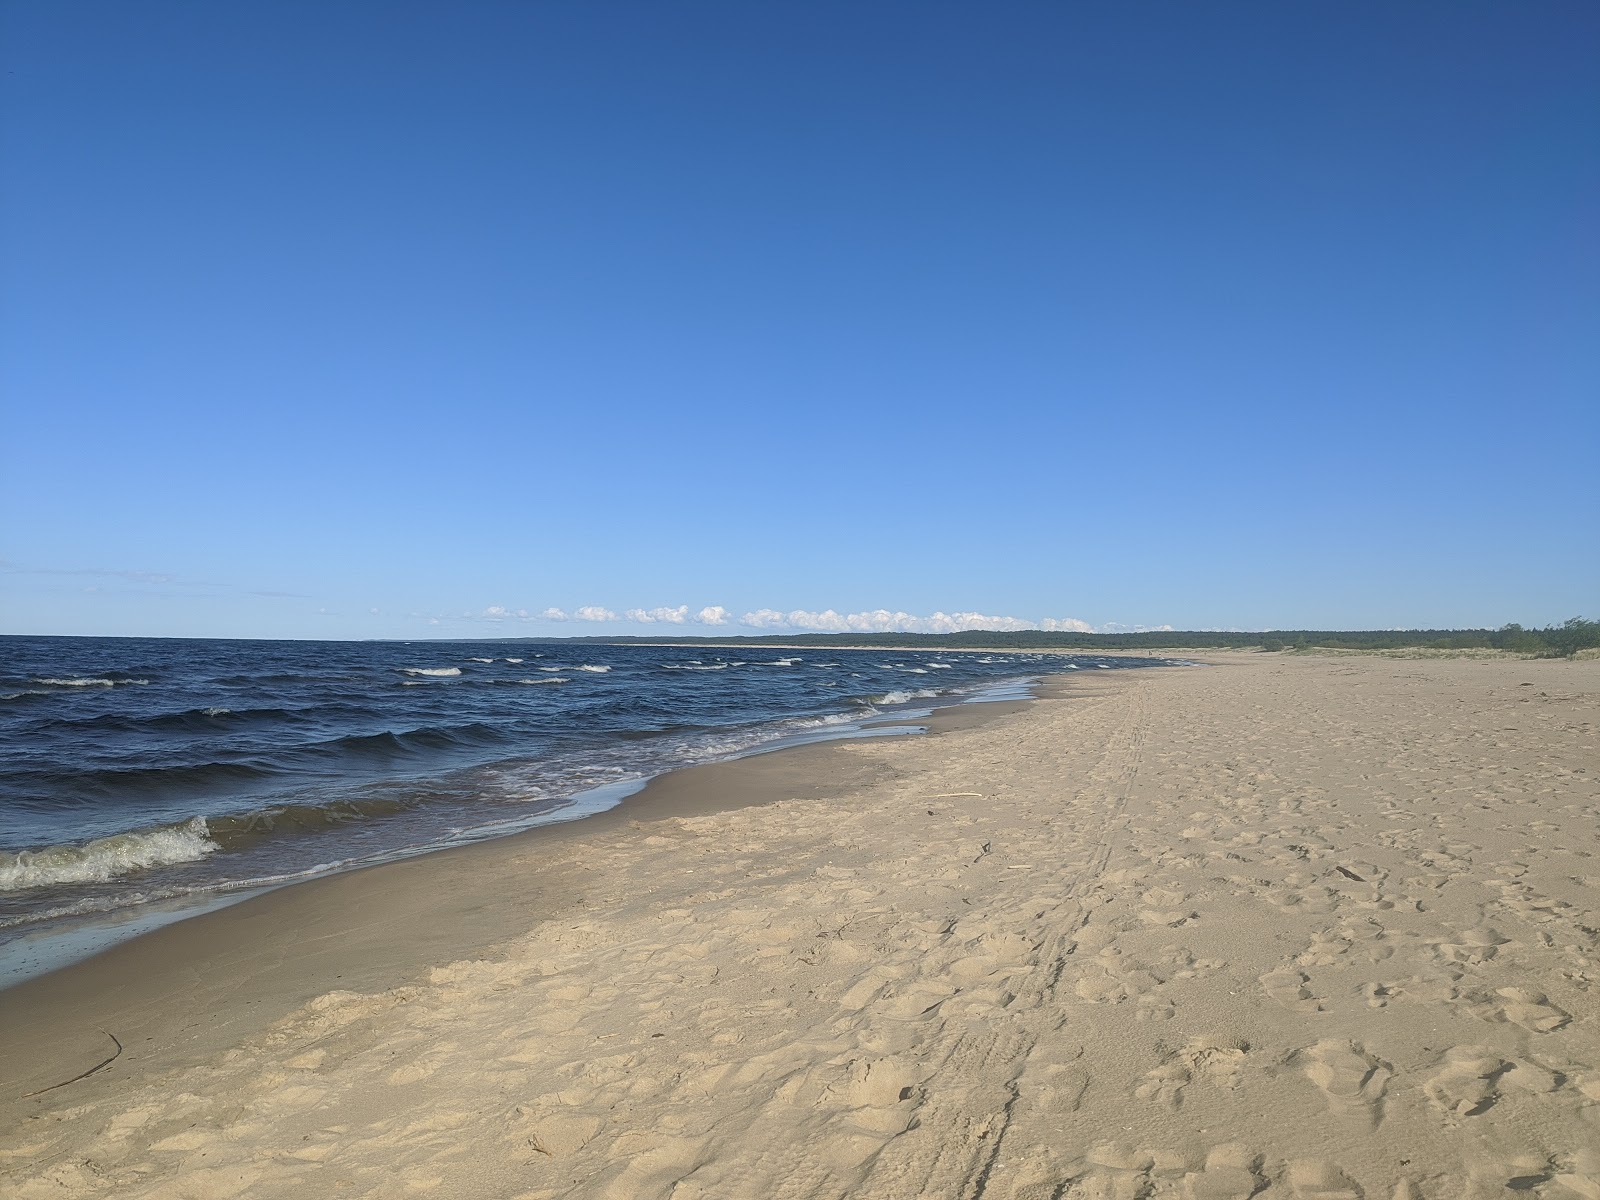 Fotografie cu Mikoszewo Beach cu nivelul de curățenie in medie